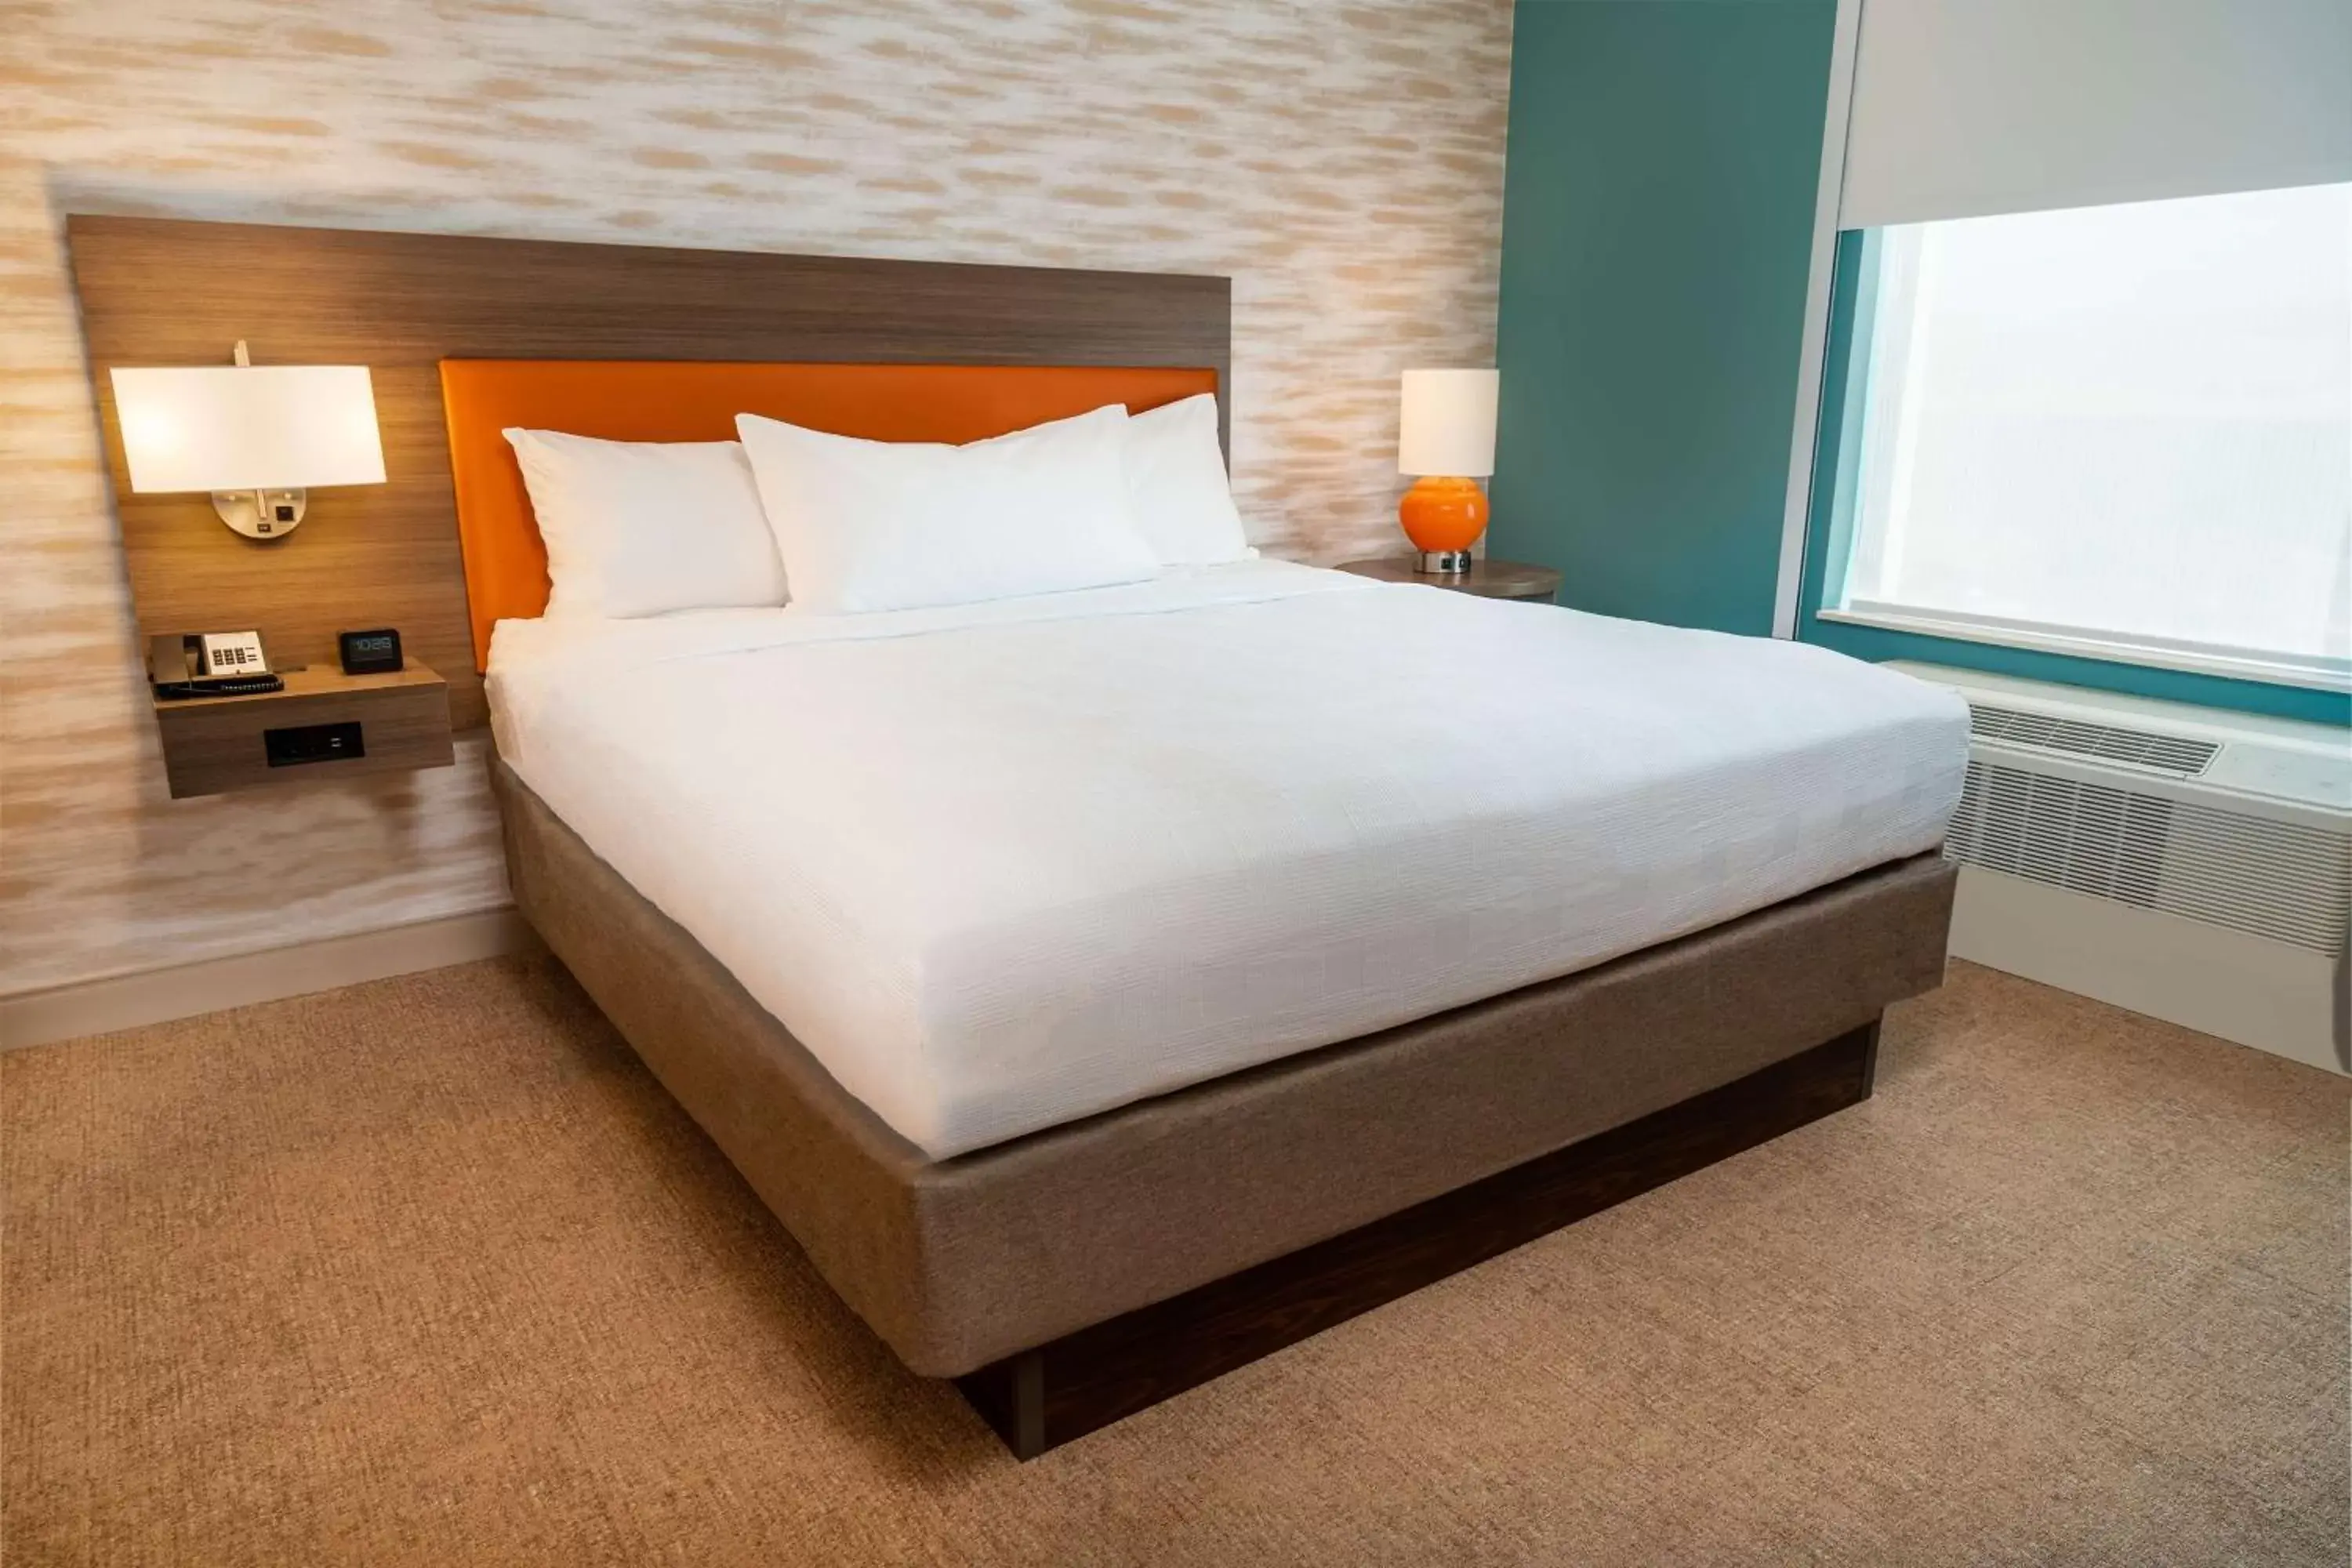 Bed in Home2 Suites Corona, Ca